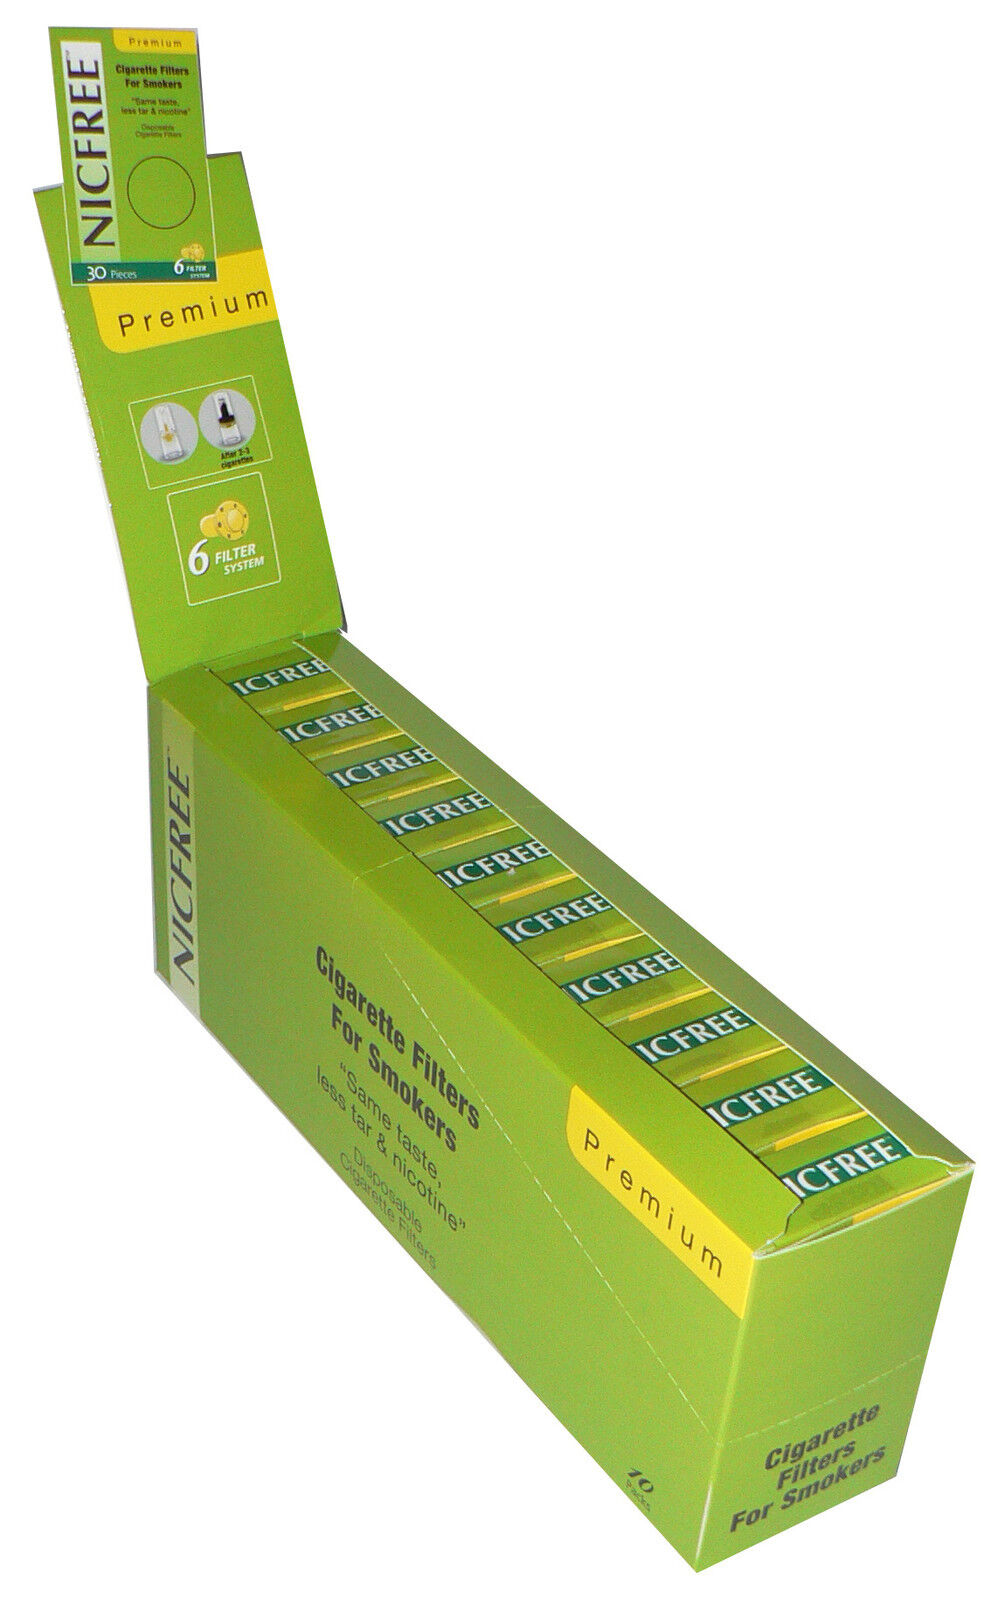 NICFREE Premium Cigarette Filters Remove Tar & Nicotine 10 Packs 300 Filters